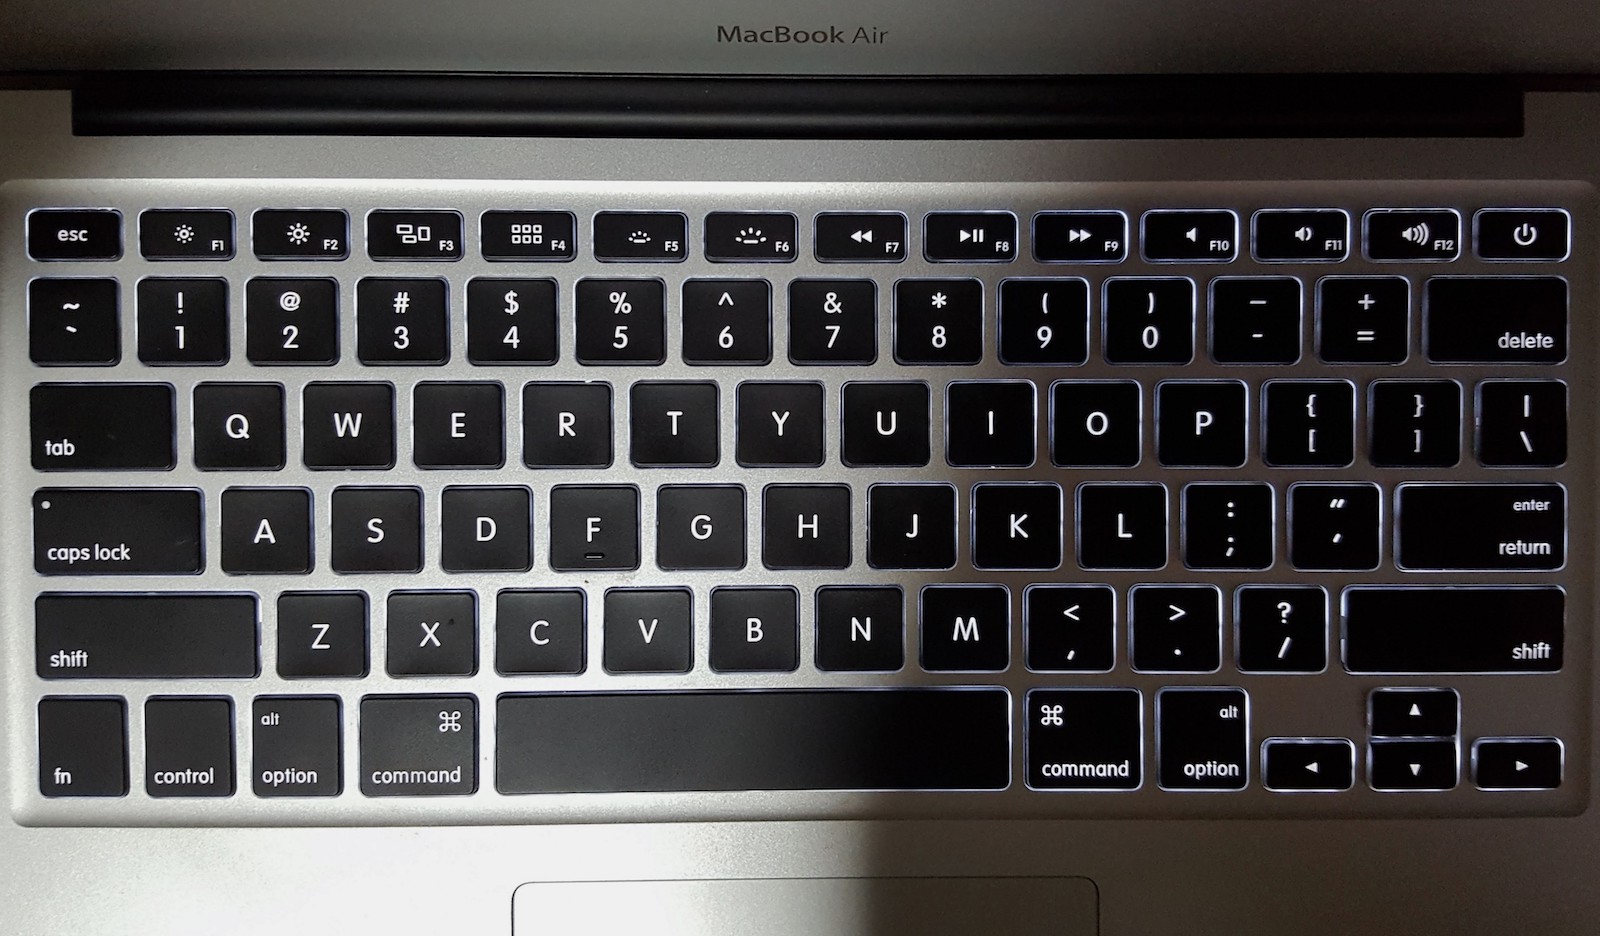 Figure 6: Macbook Air keyboard. This exact layout is found on the standard desktop keyboard.